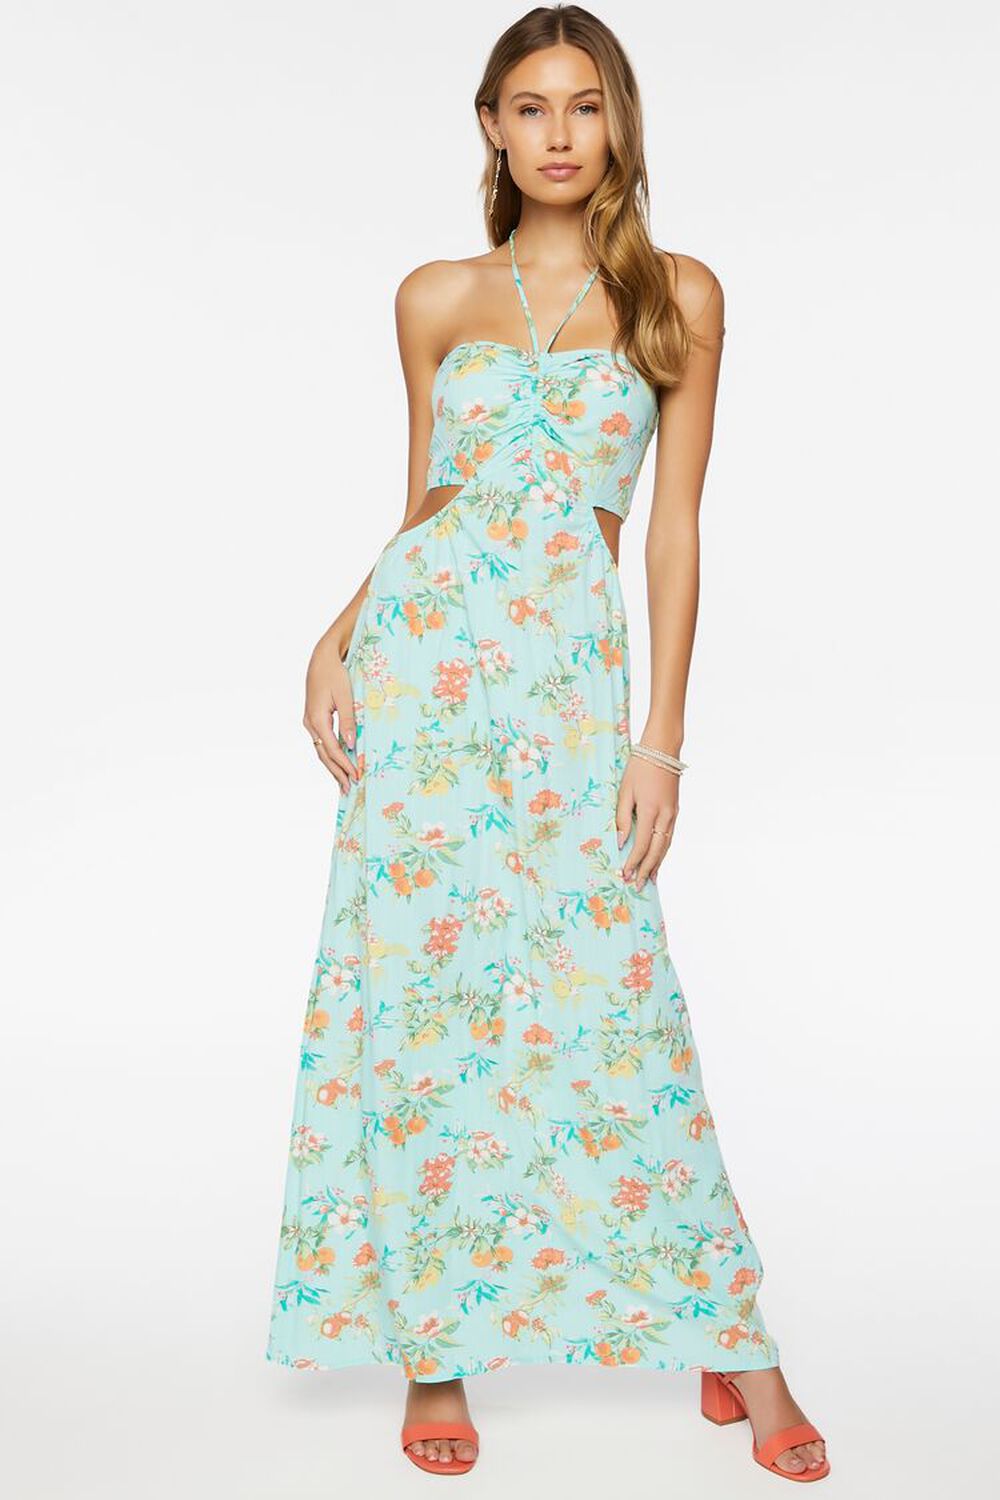 LIGHT BLUE/MULTI Floral Print Halter Maxi Dress, image 1